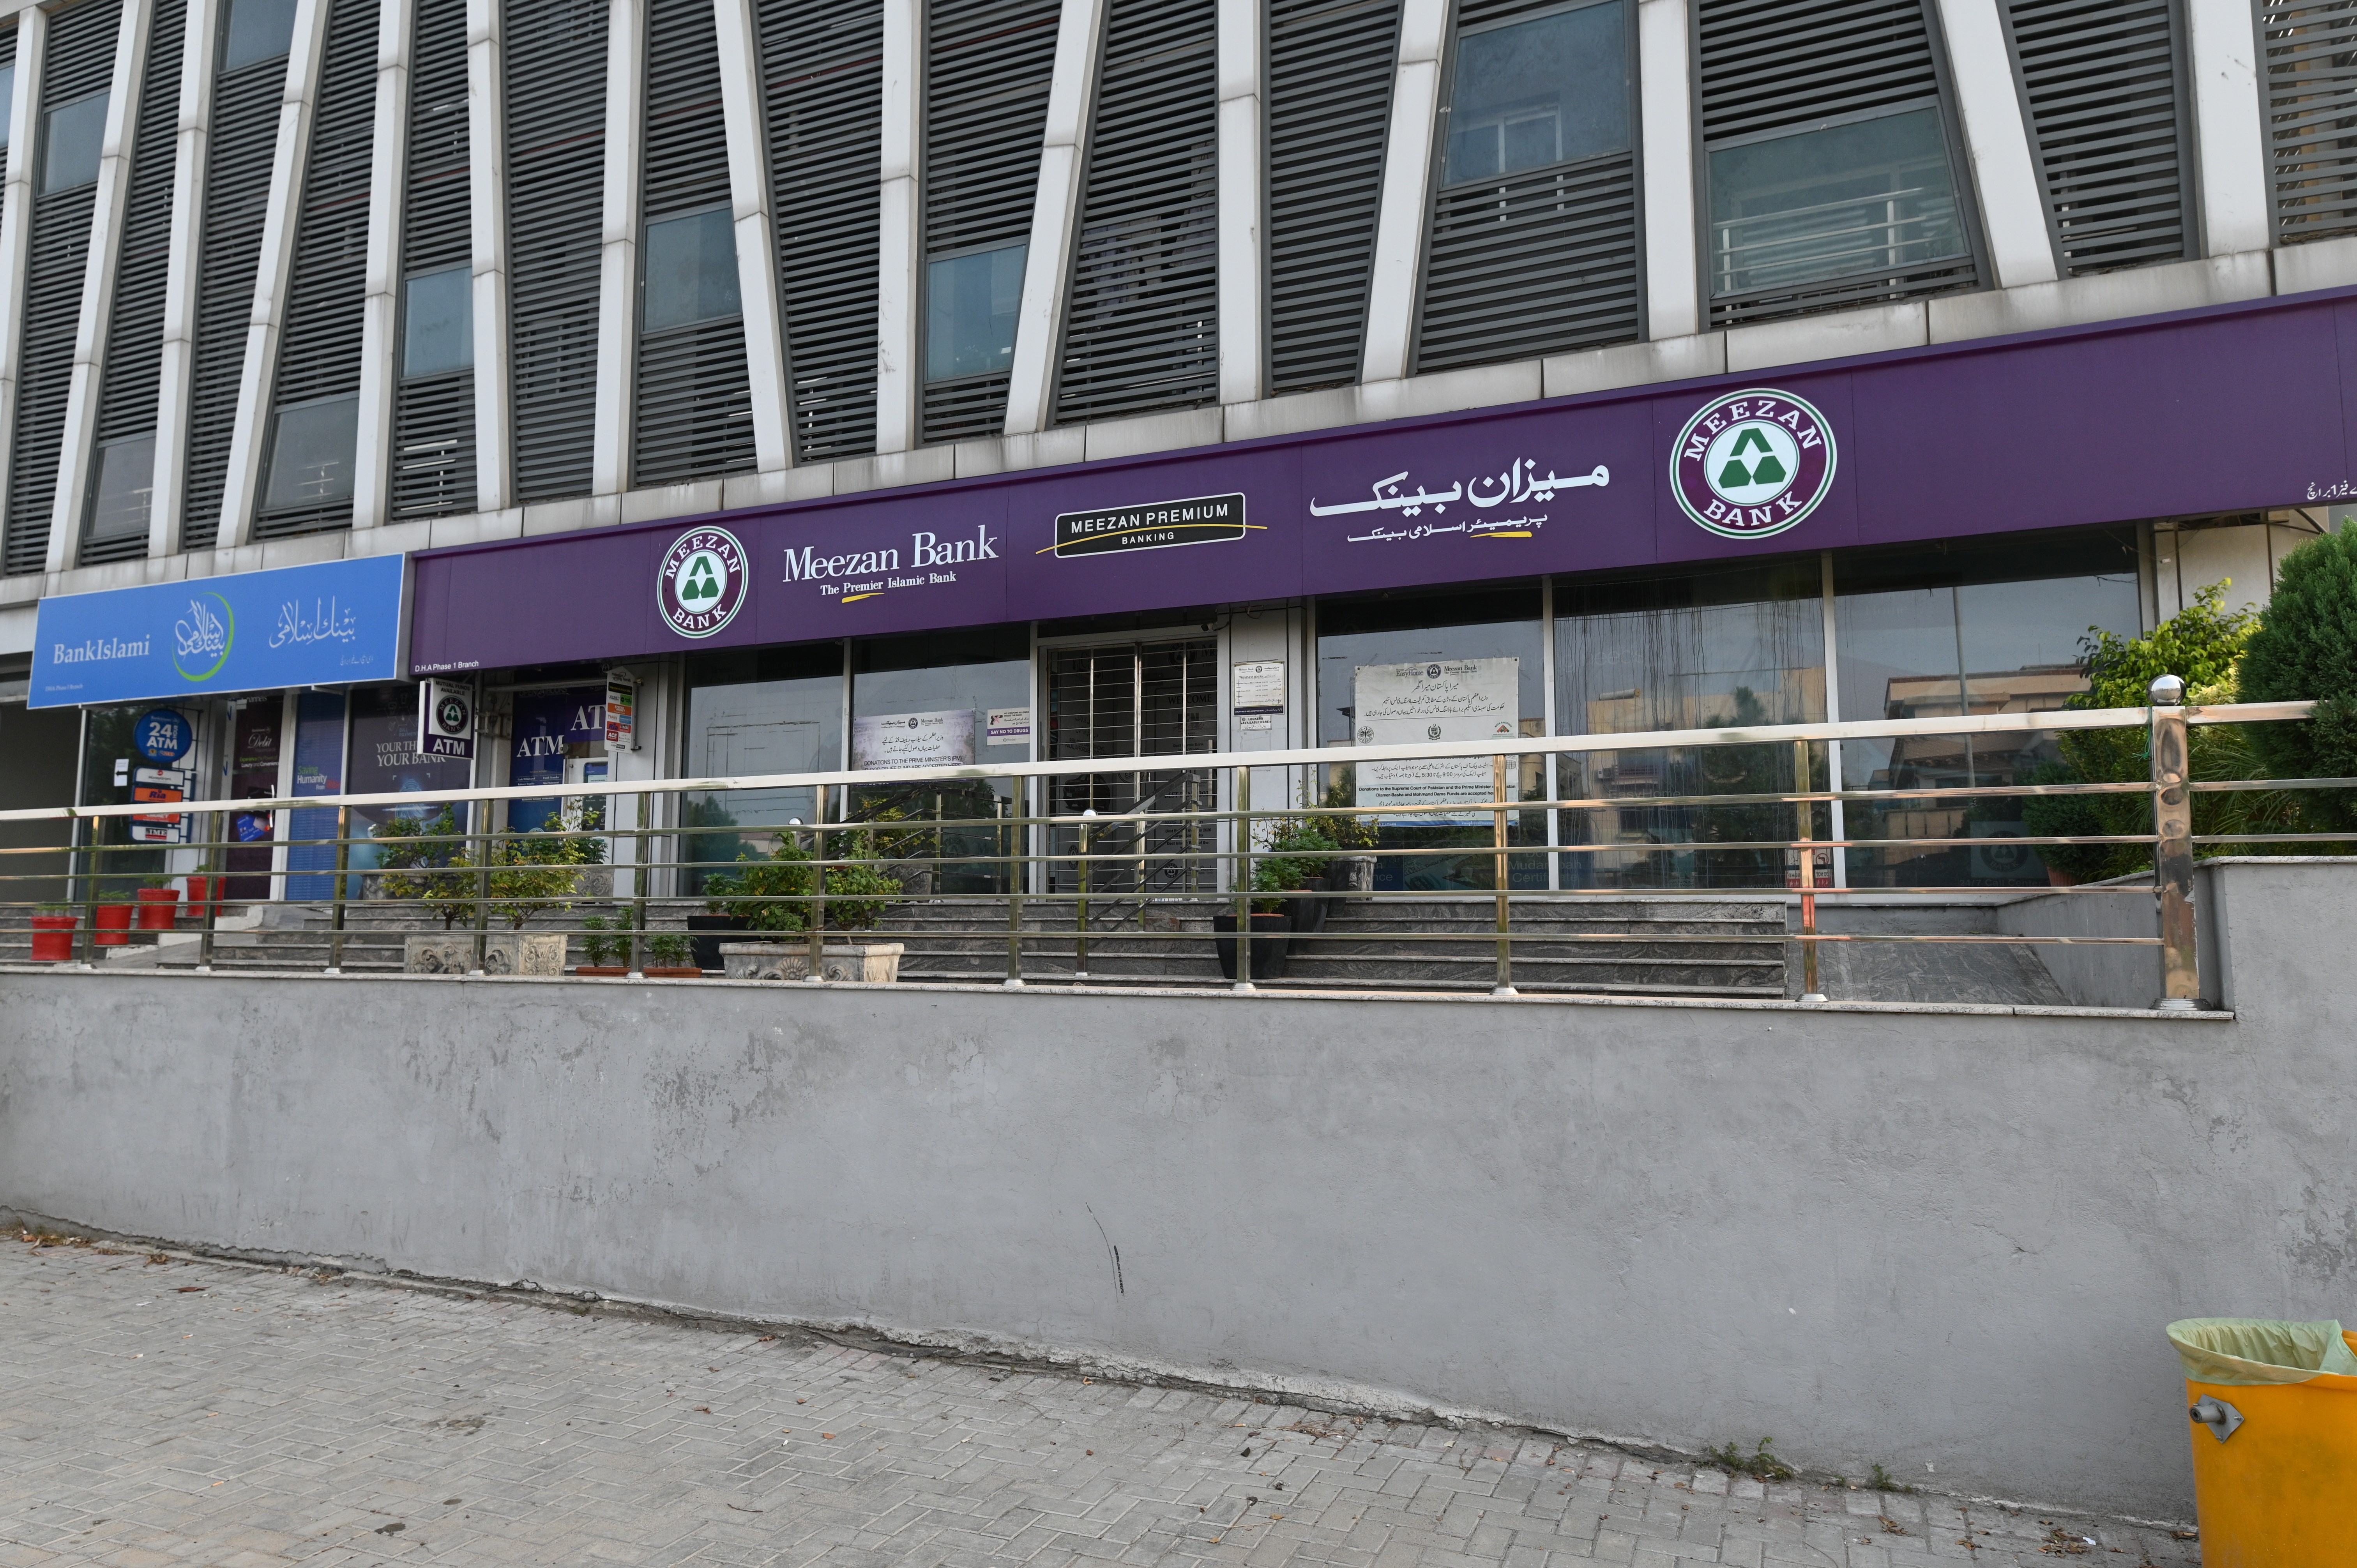 DHA-1 Branches of Meezan Bank and Bank Islami